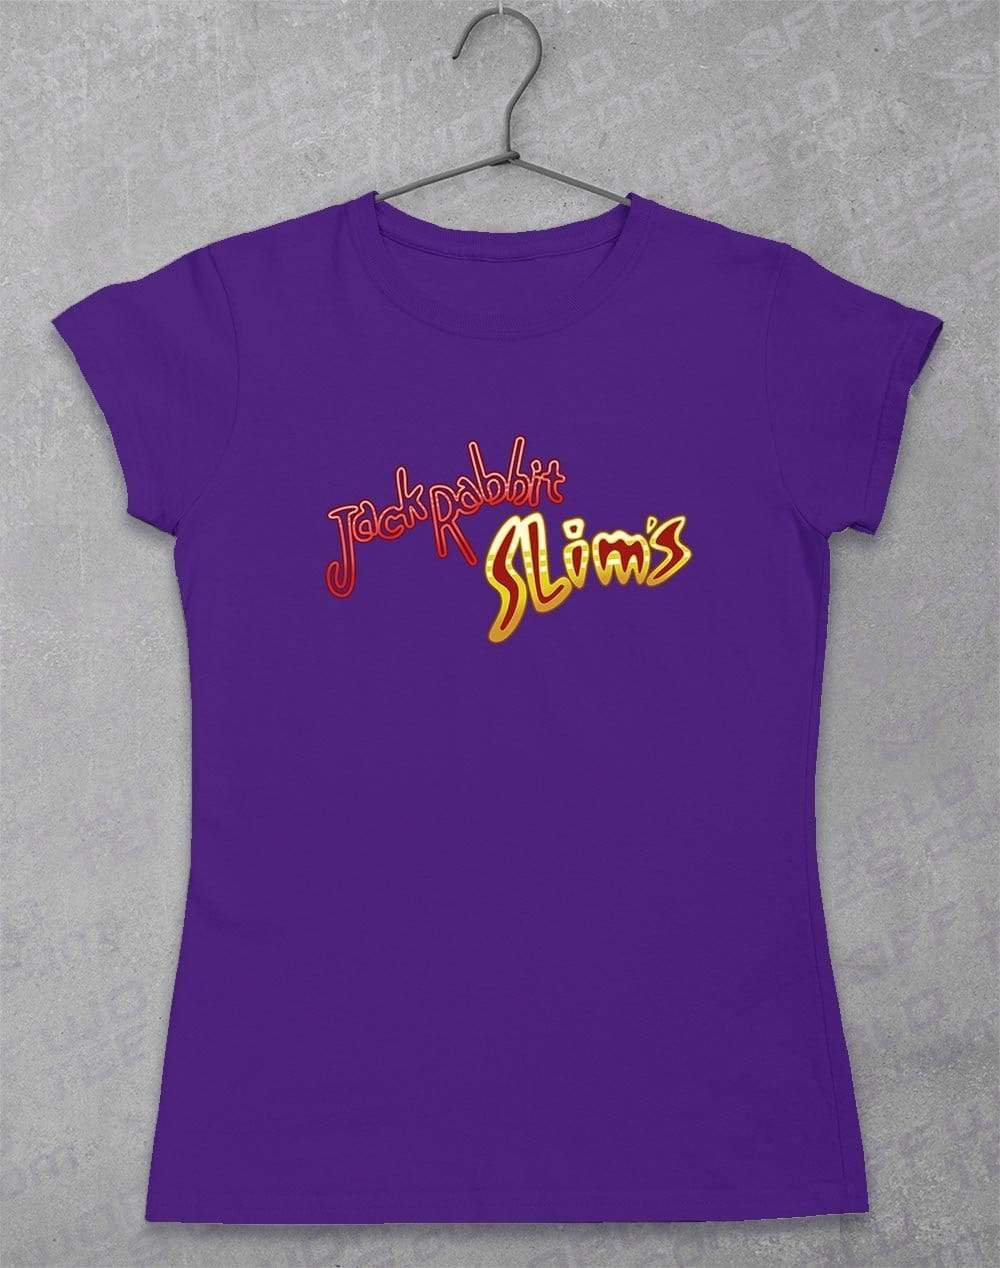 Jack Rabbit Slim's Women's T-Shirt 8-10 / Lilac  - Off World Tees